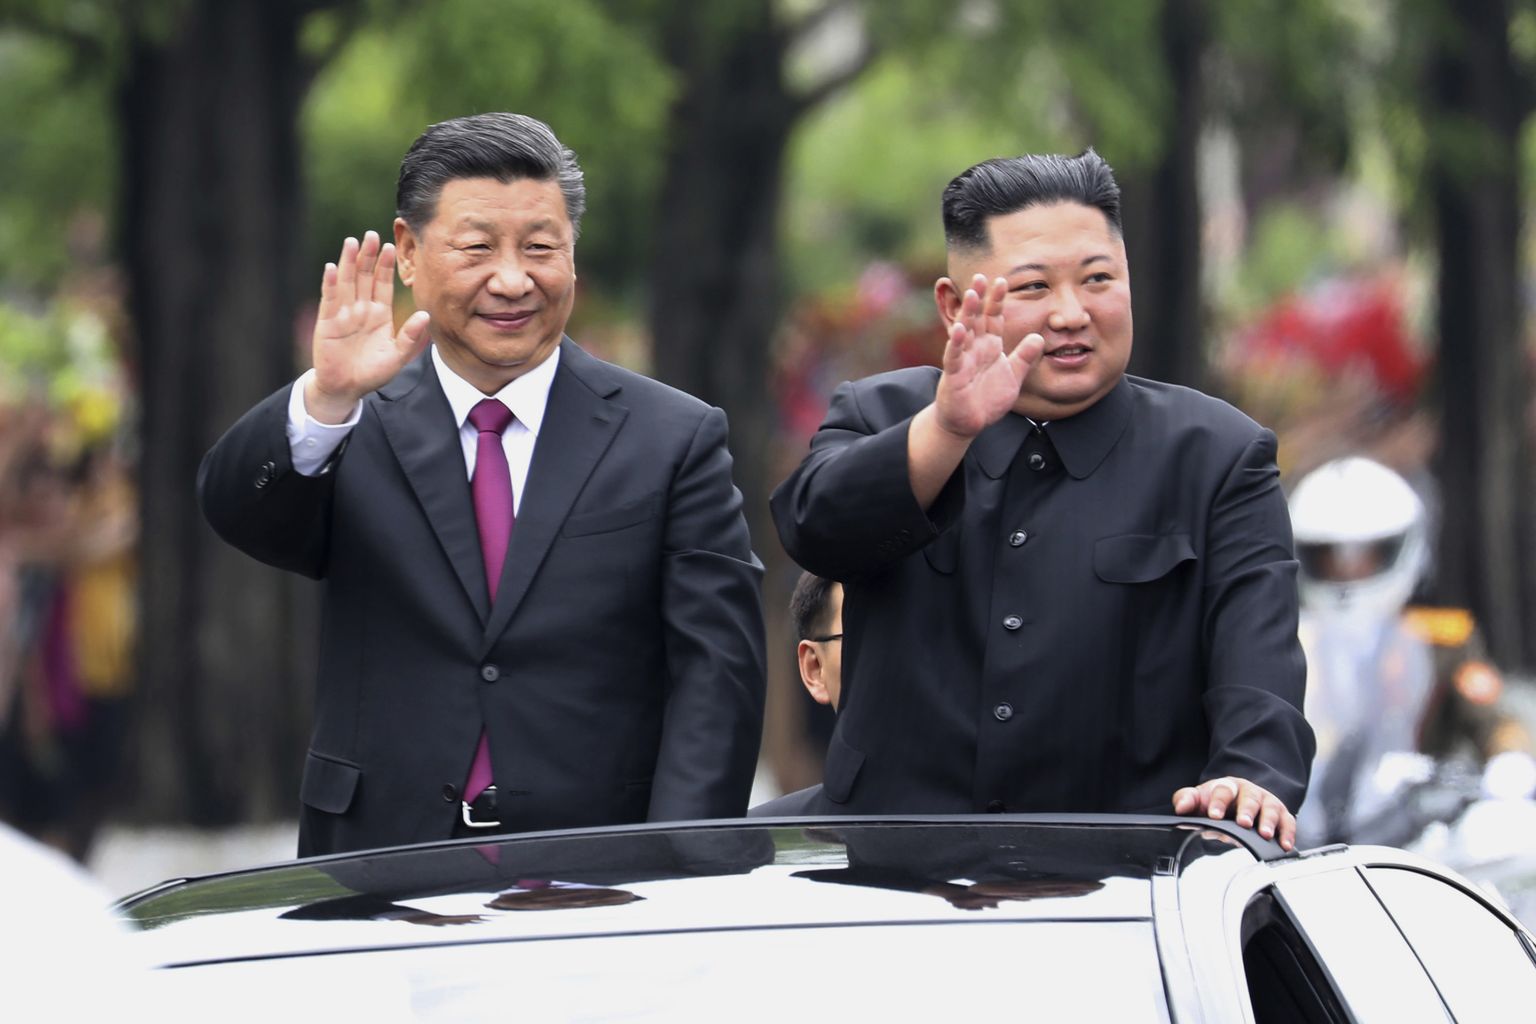 Hiina president Xi Jinping ja Põhja-Korea liider Kim Jong-un.